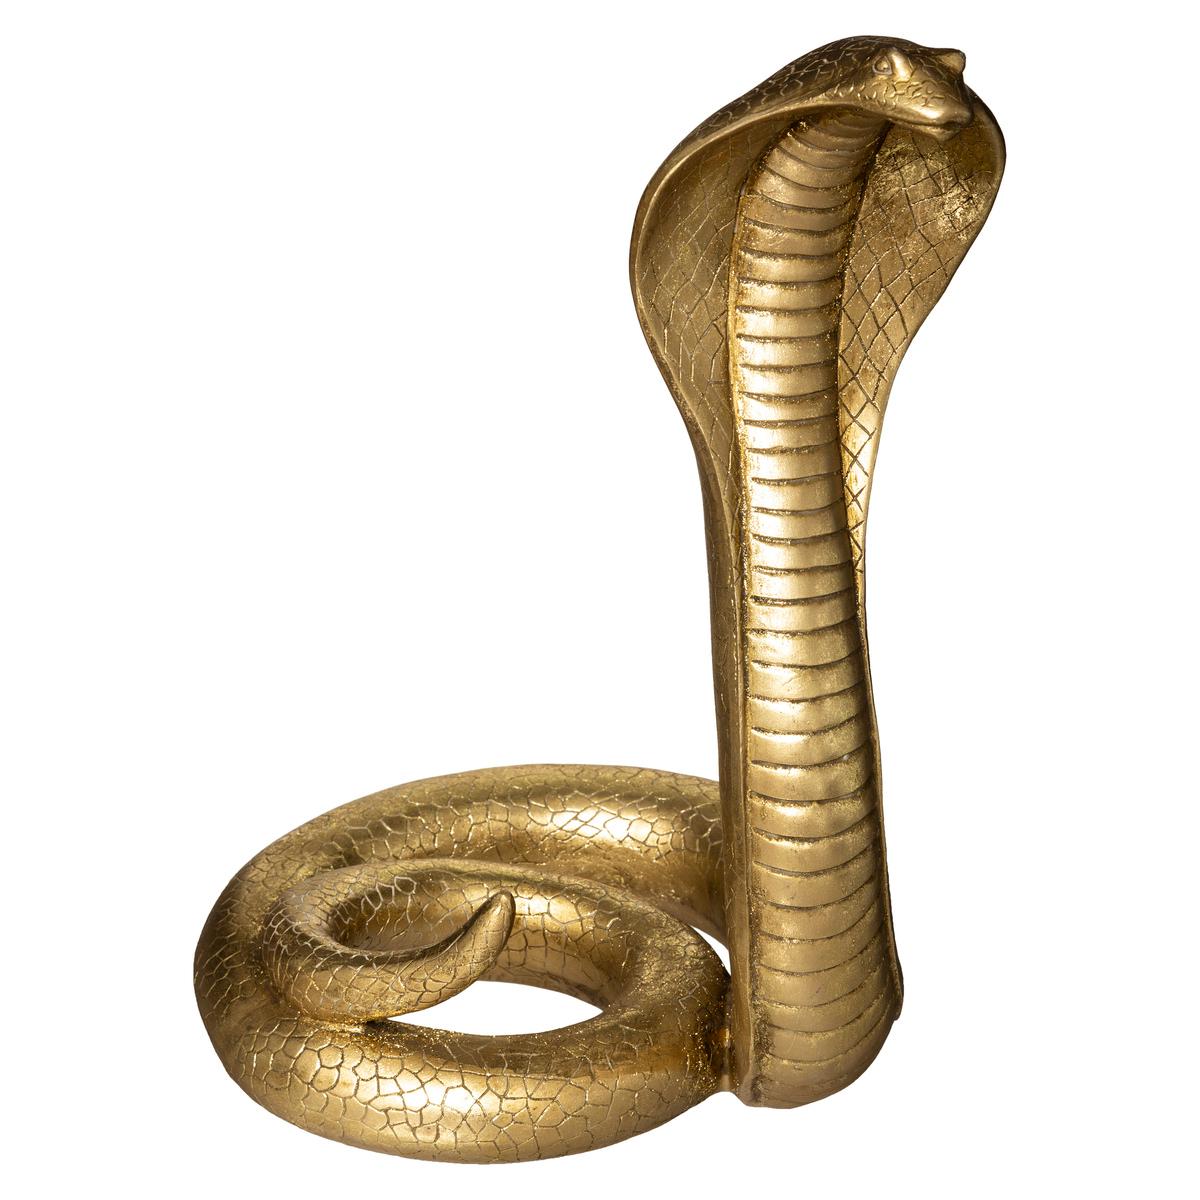 SATURN RISIN9 @ gold diggers — The Cobrasnake